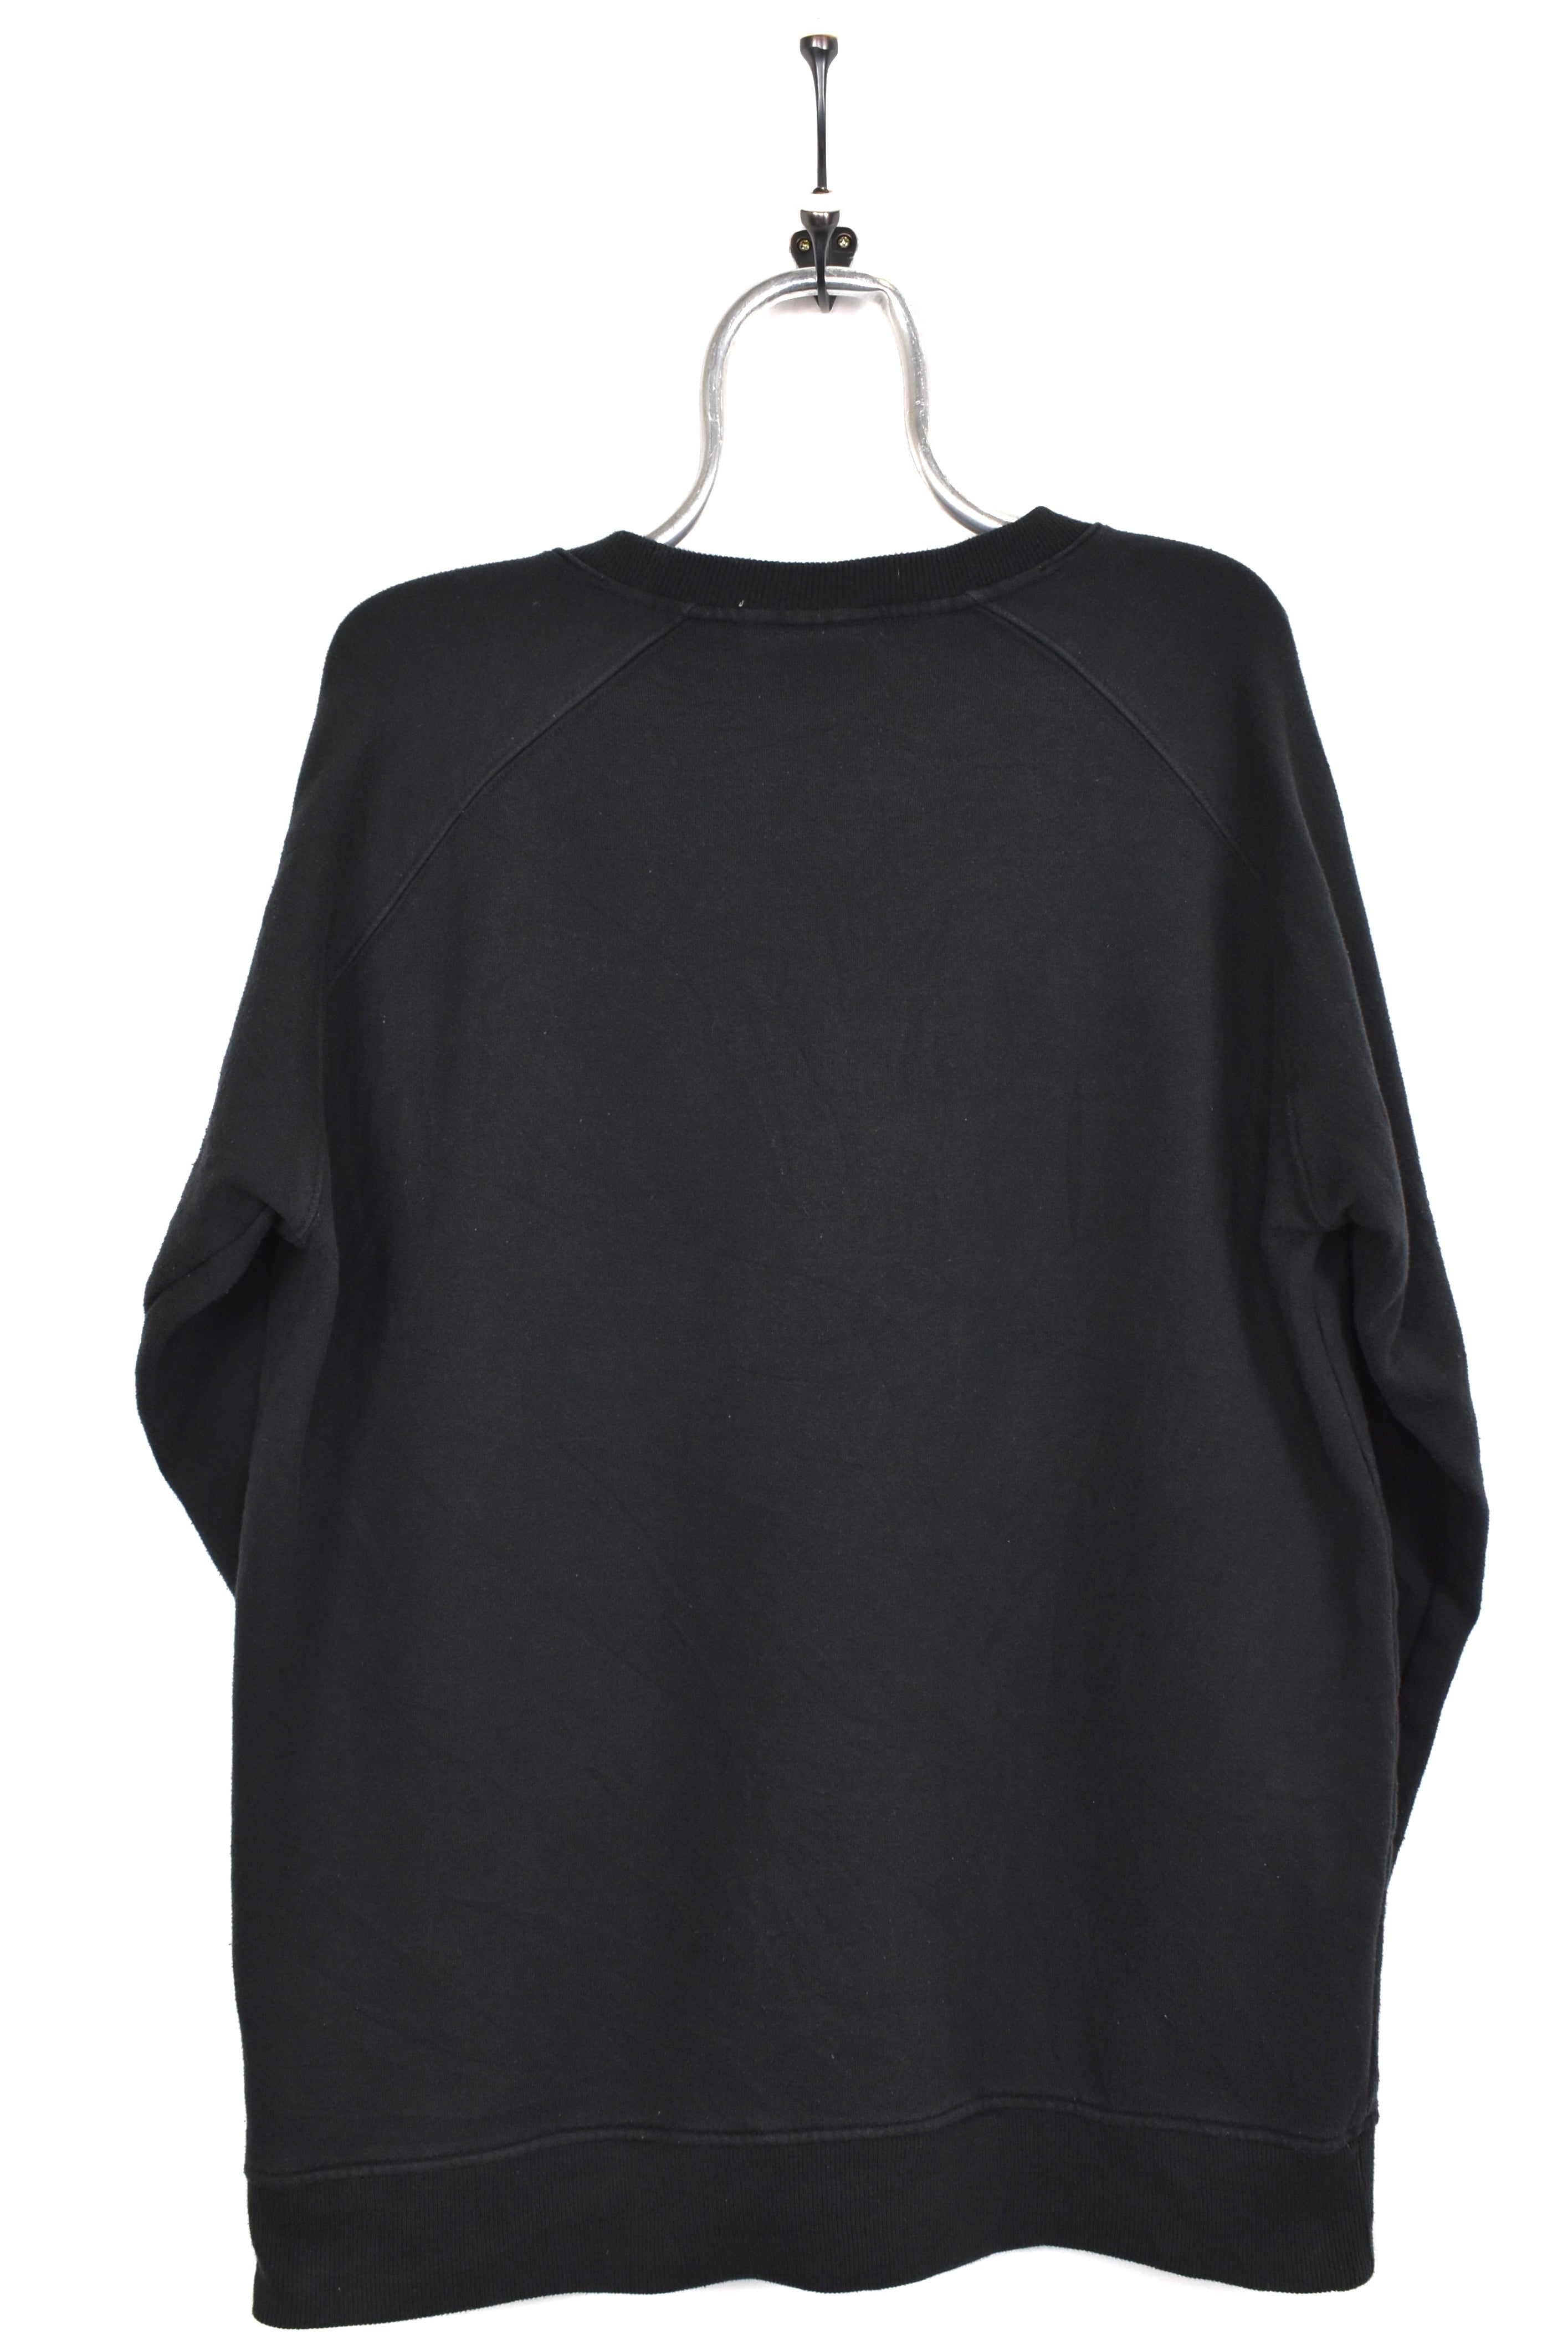 Vintage Adidas sweatshirt, black graphic crewneck - AU XL ADIDAS